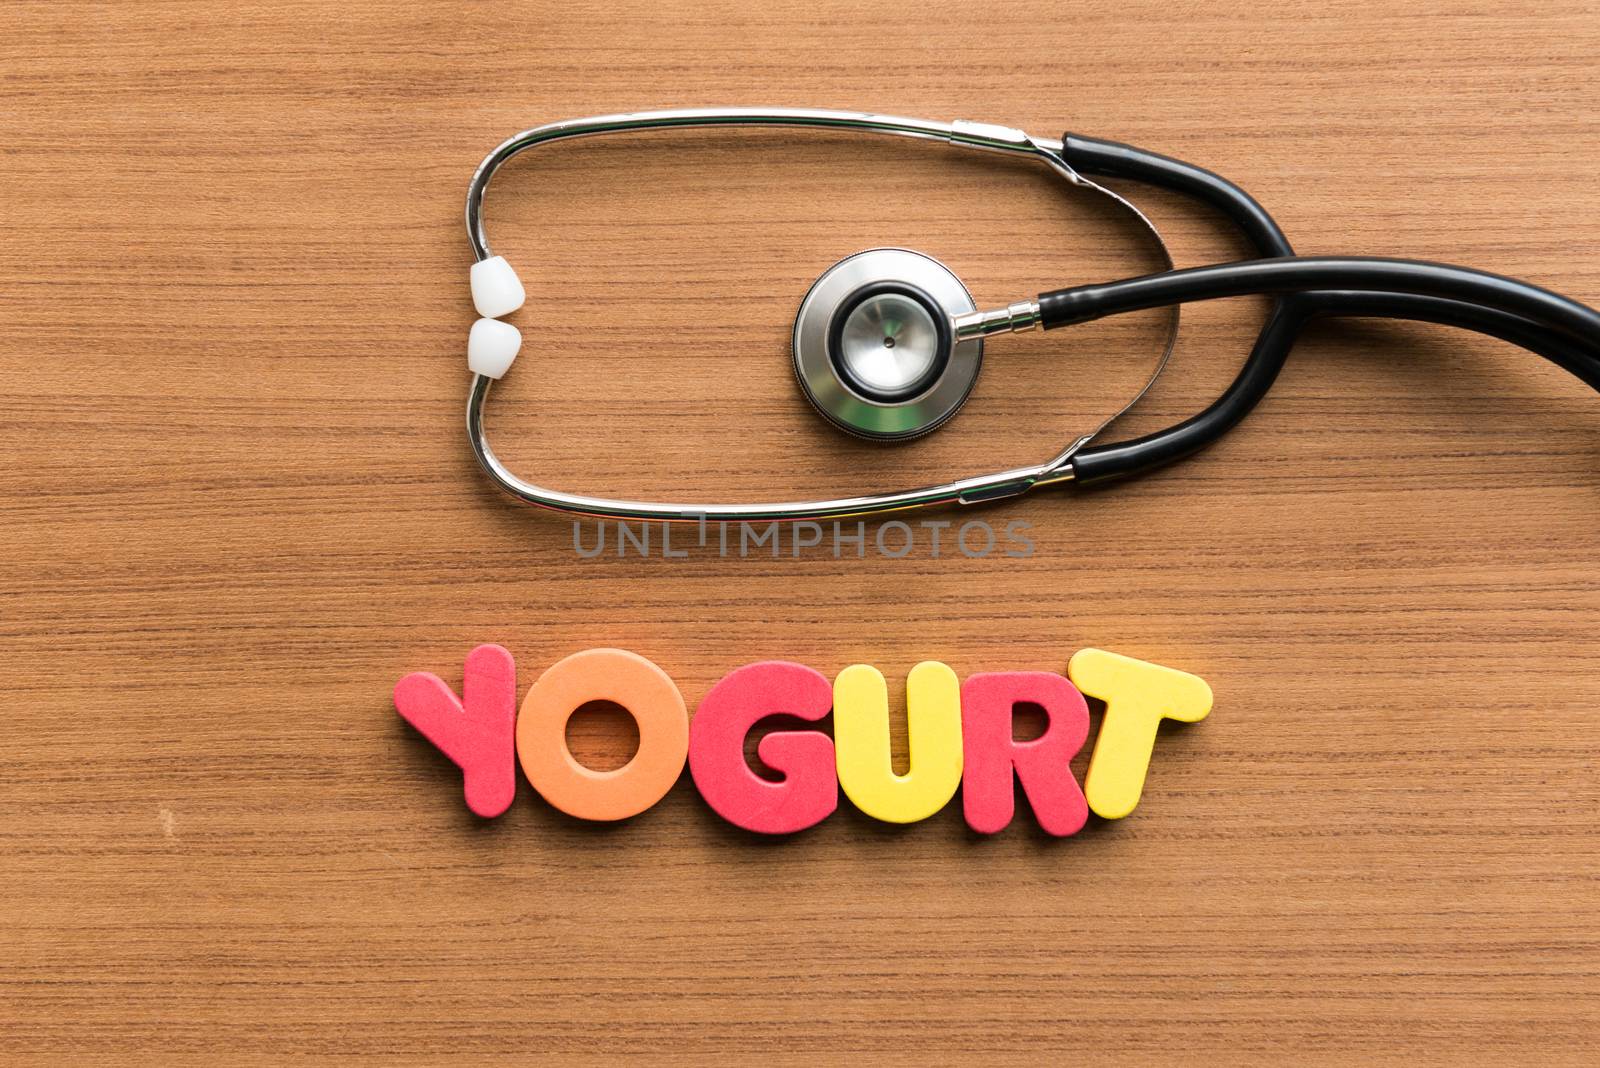 yogurt colorful word with stethoscope by sohel.parvez@hotmail.com